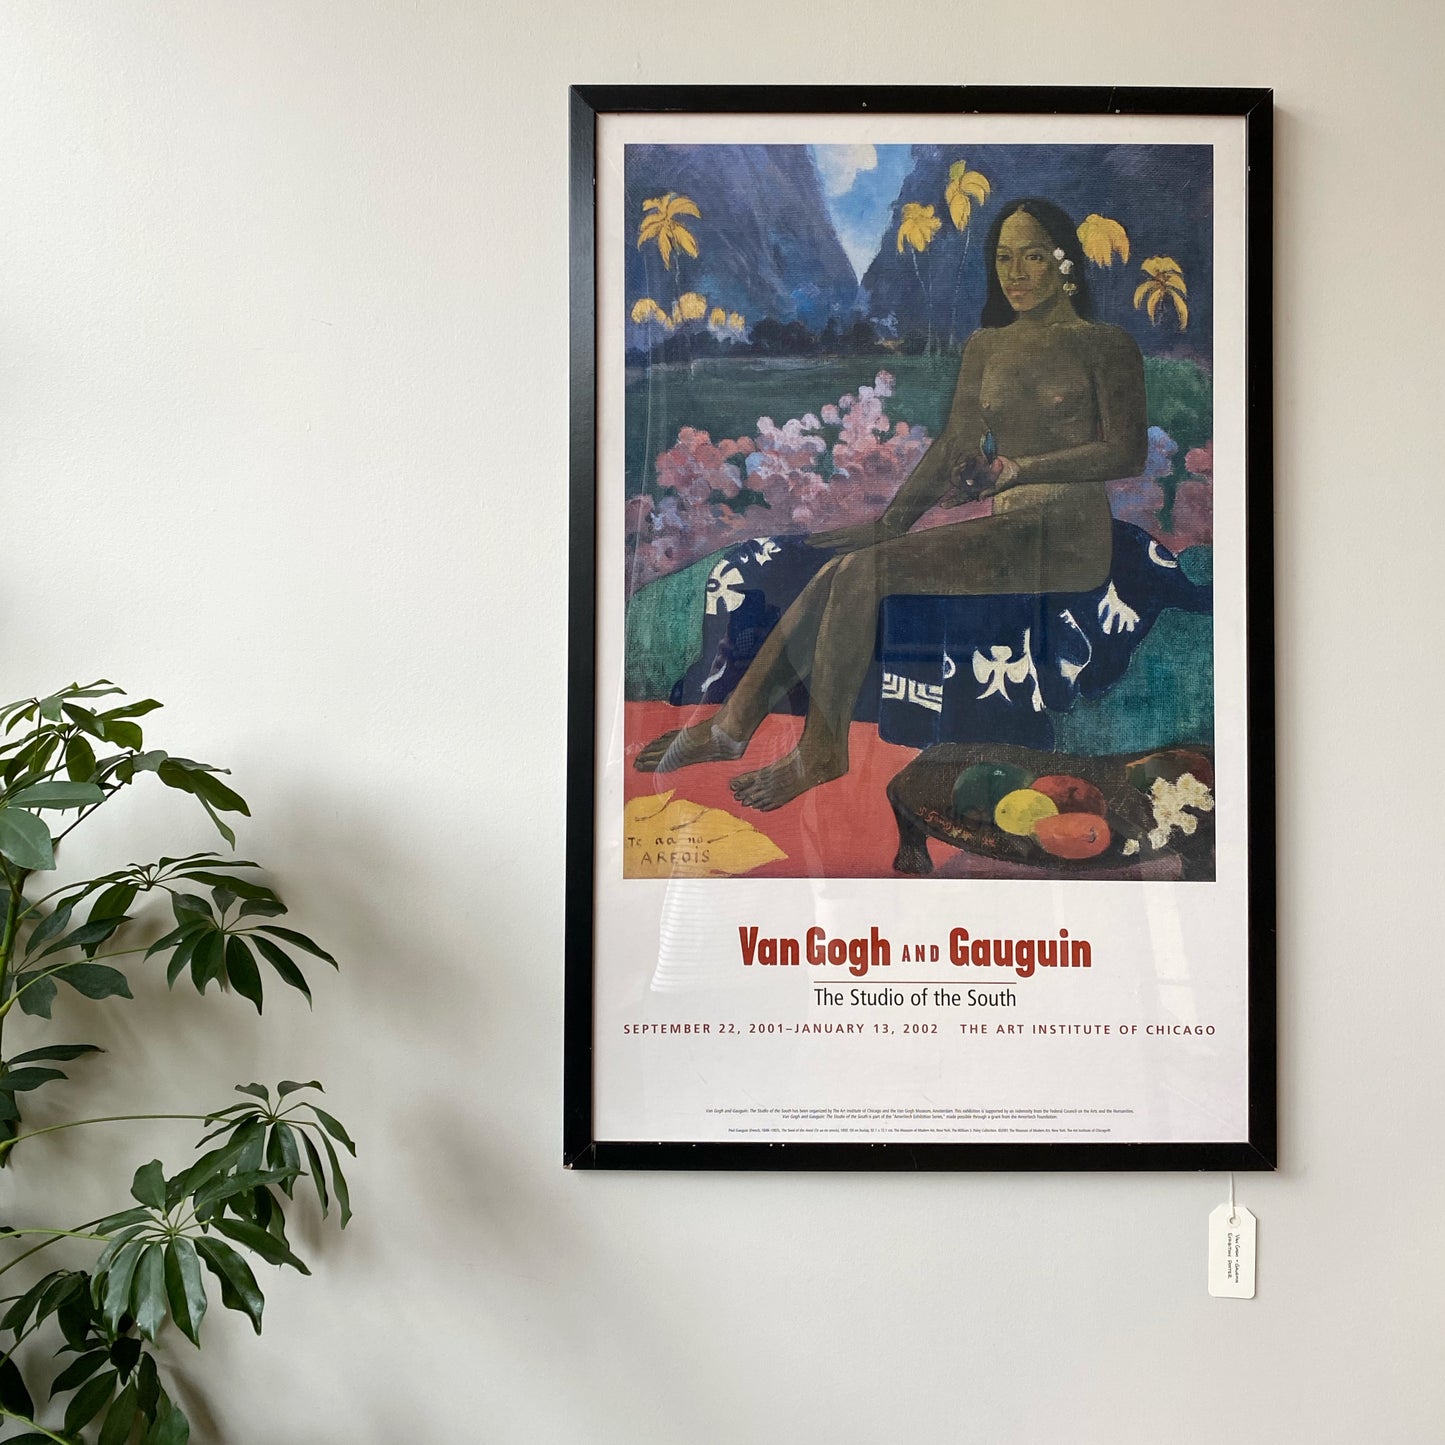 Vintage Exhibition Poster: Van Gogh and Gauguin